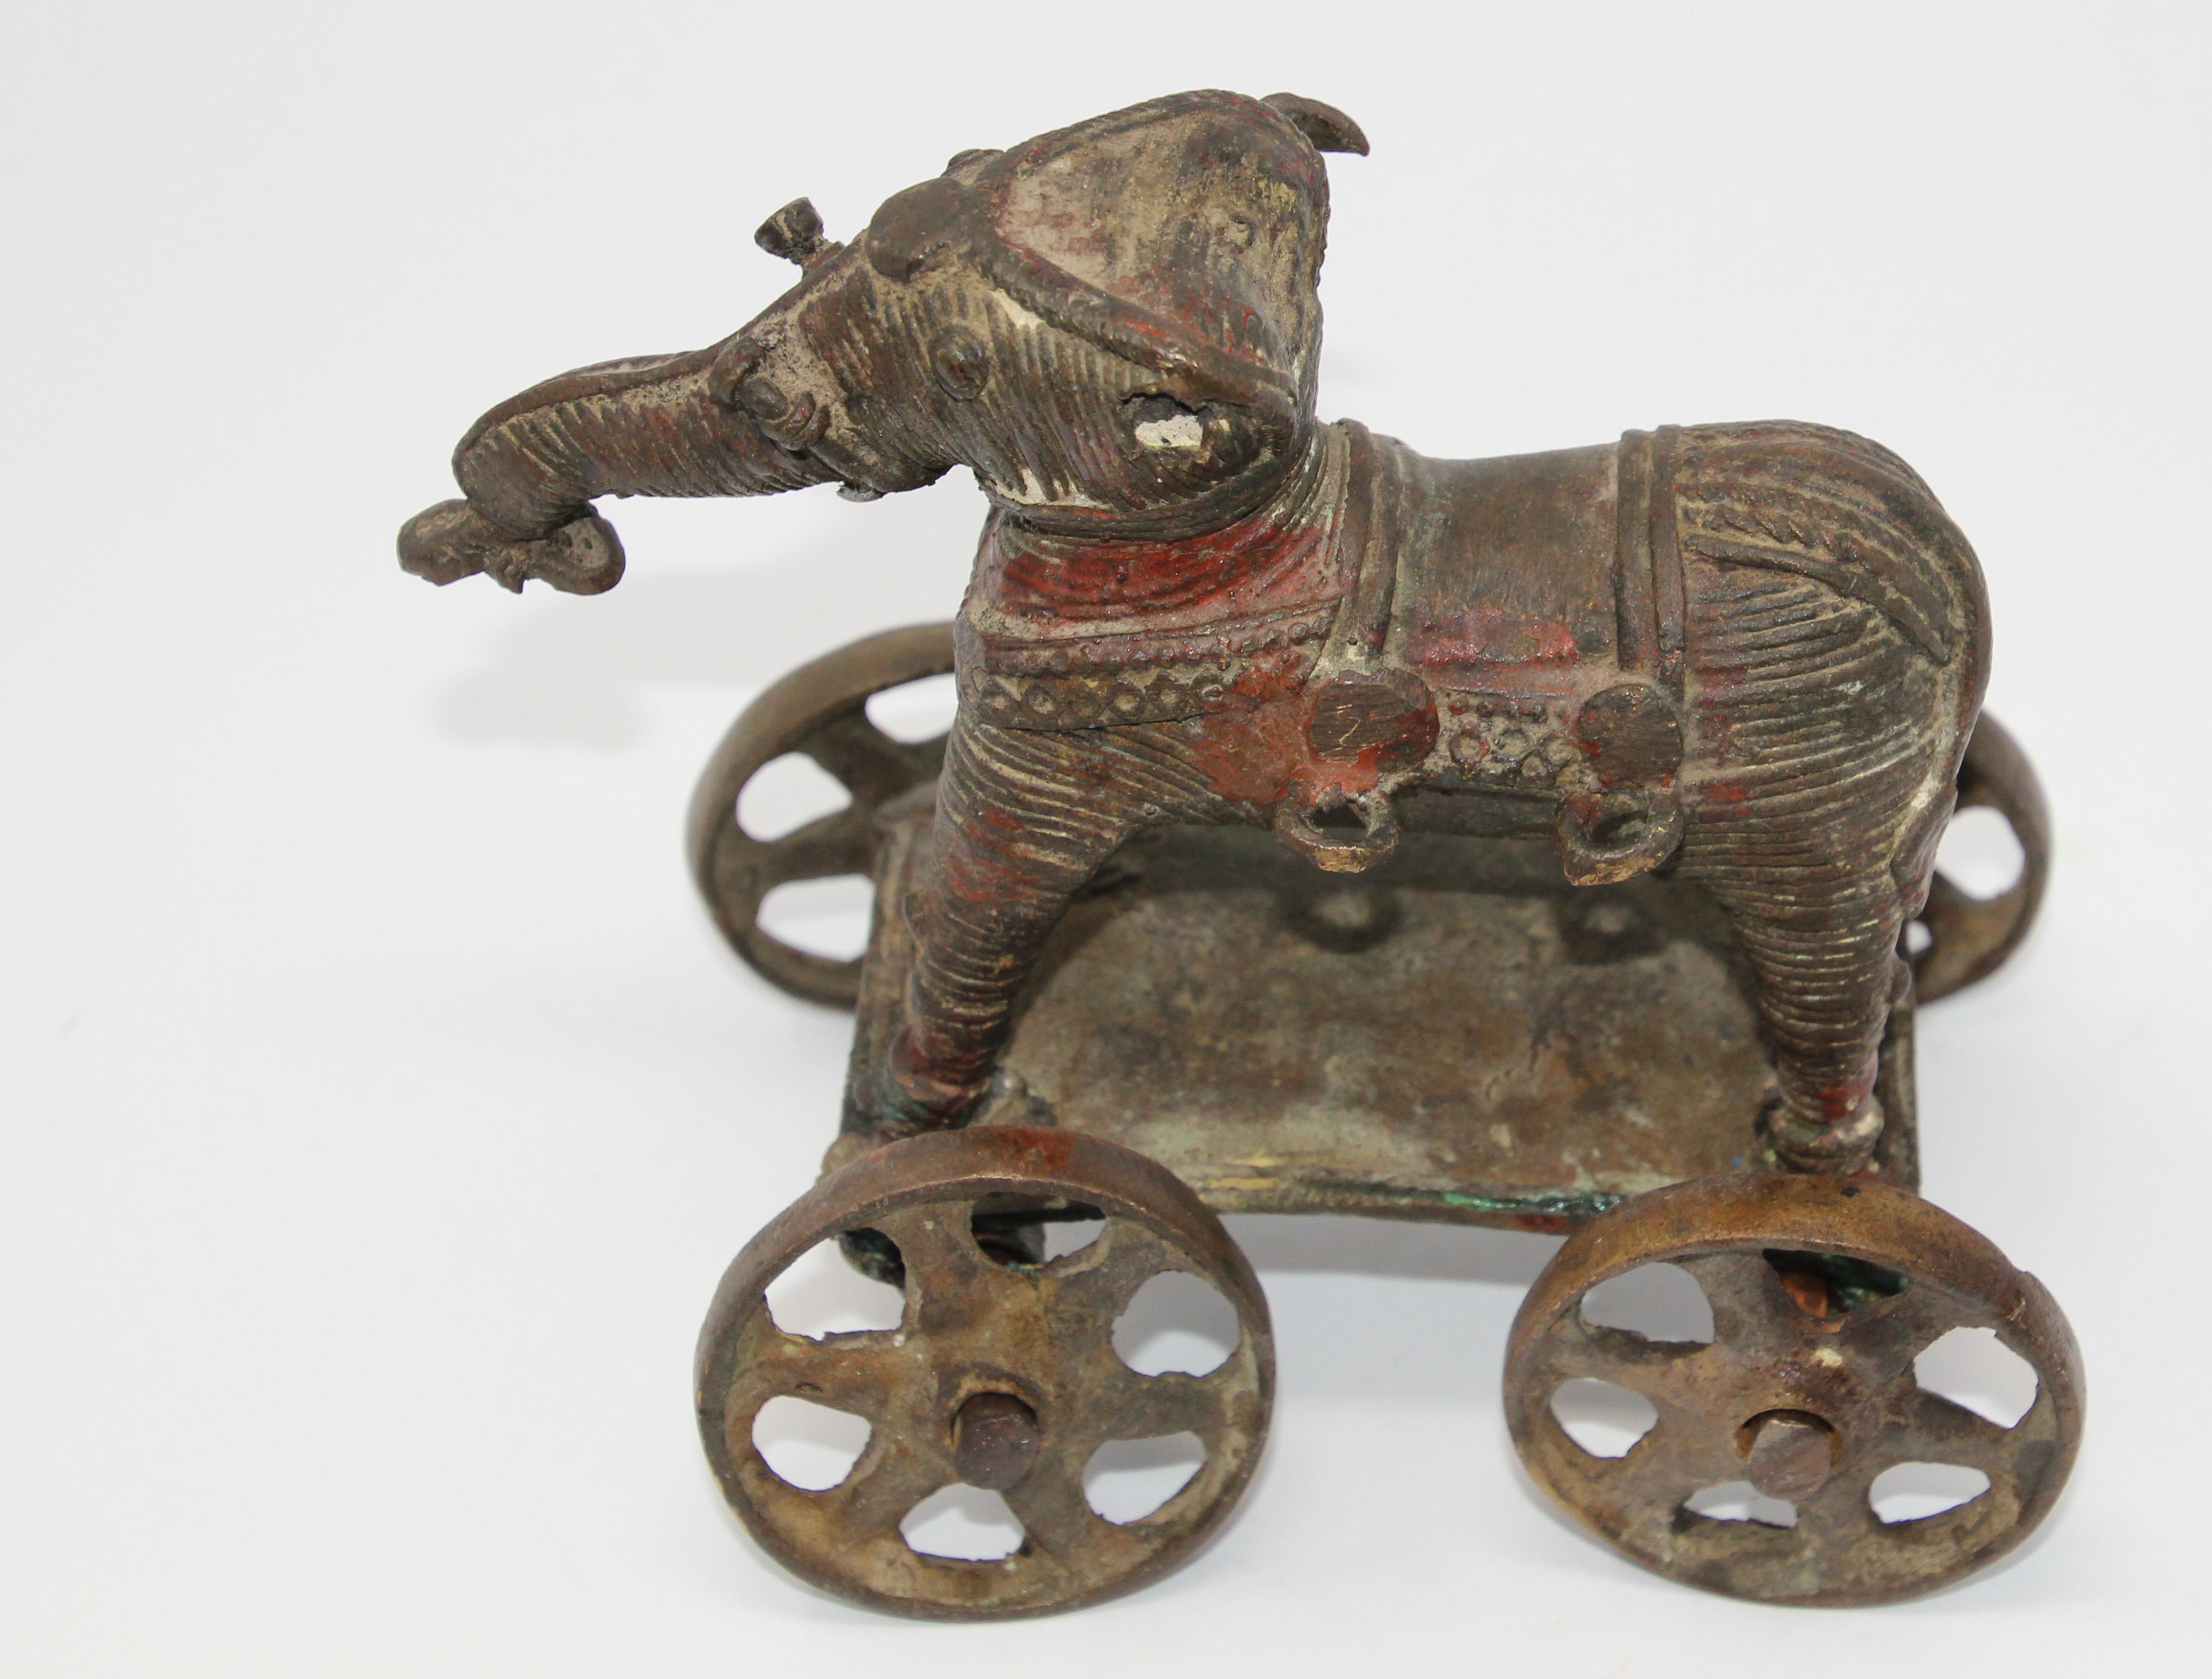 Antique Elephant Toy Cast Bronze on Wheels, India 1